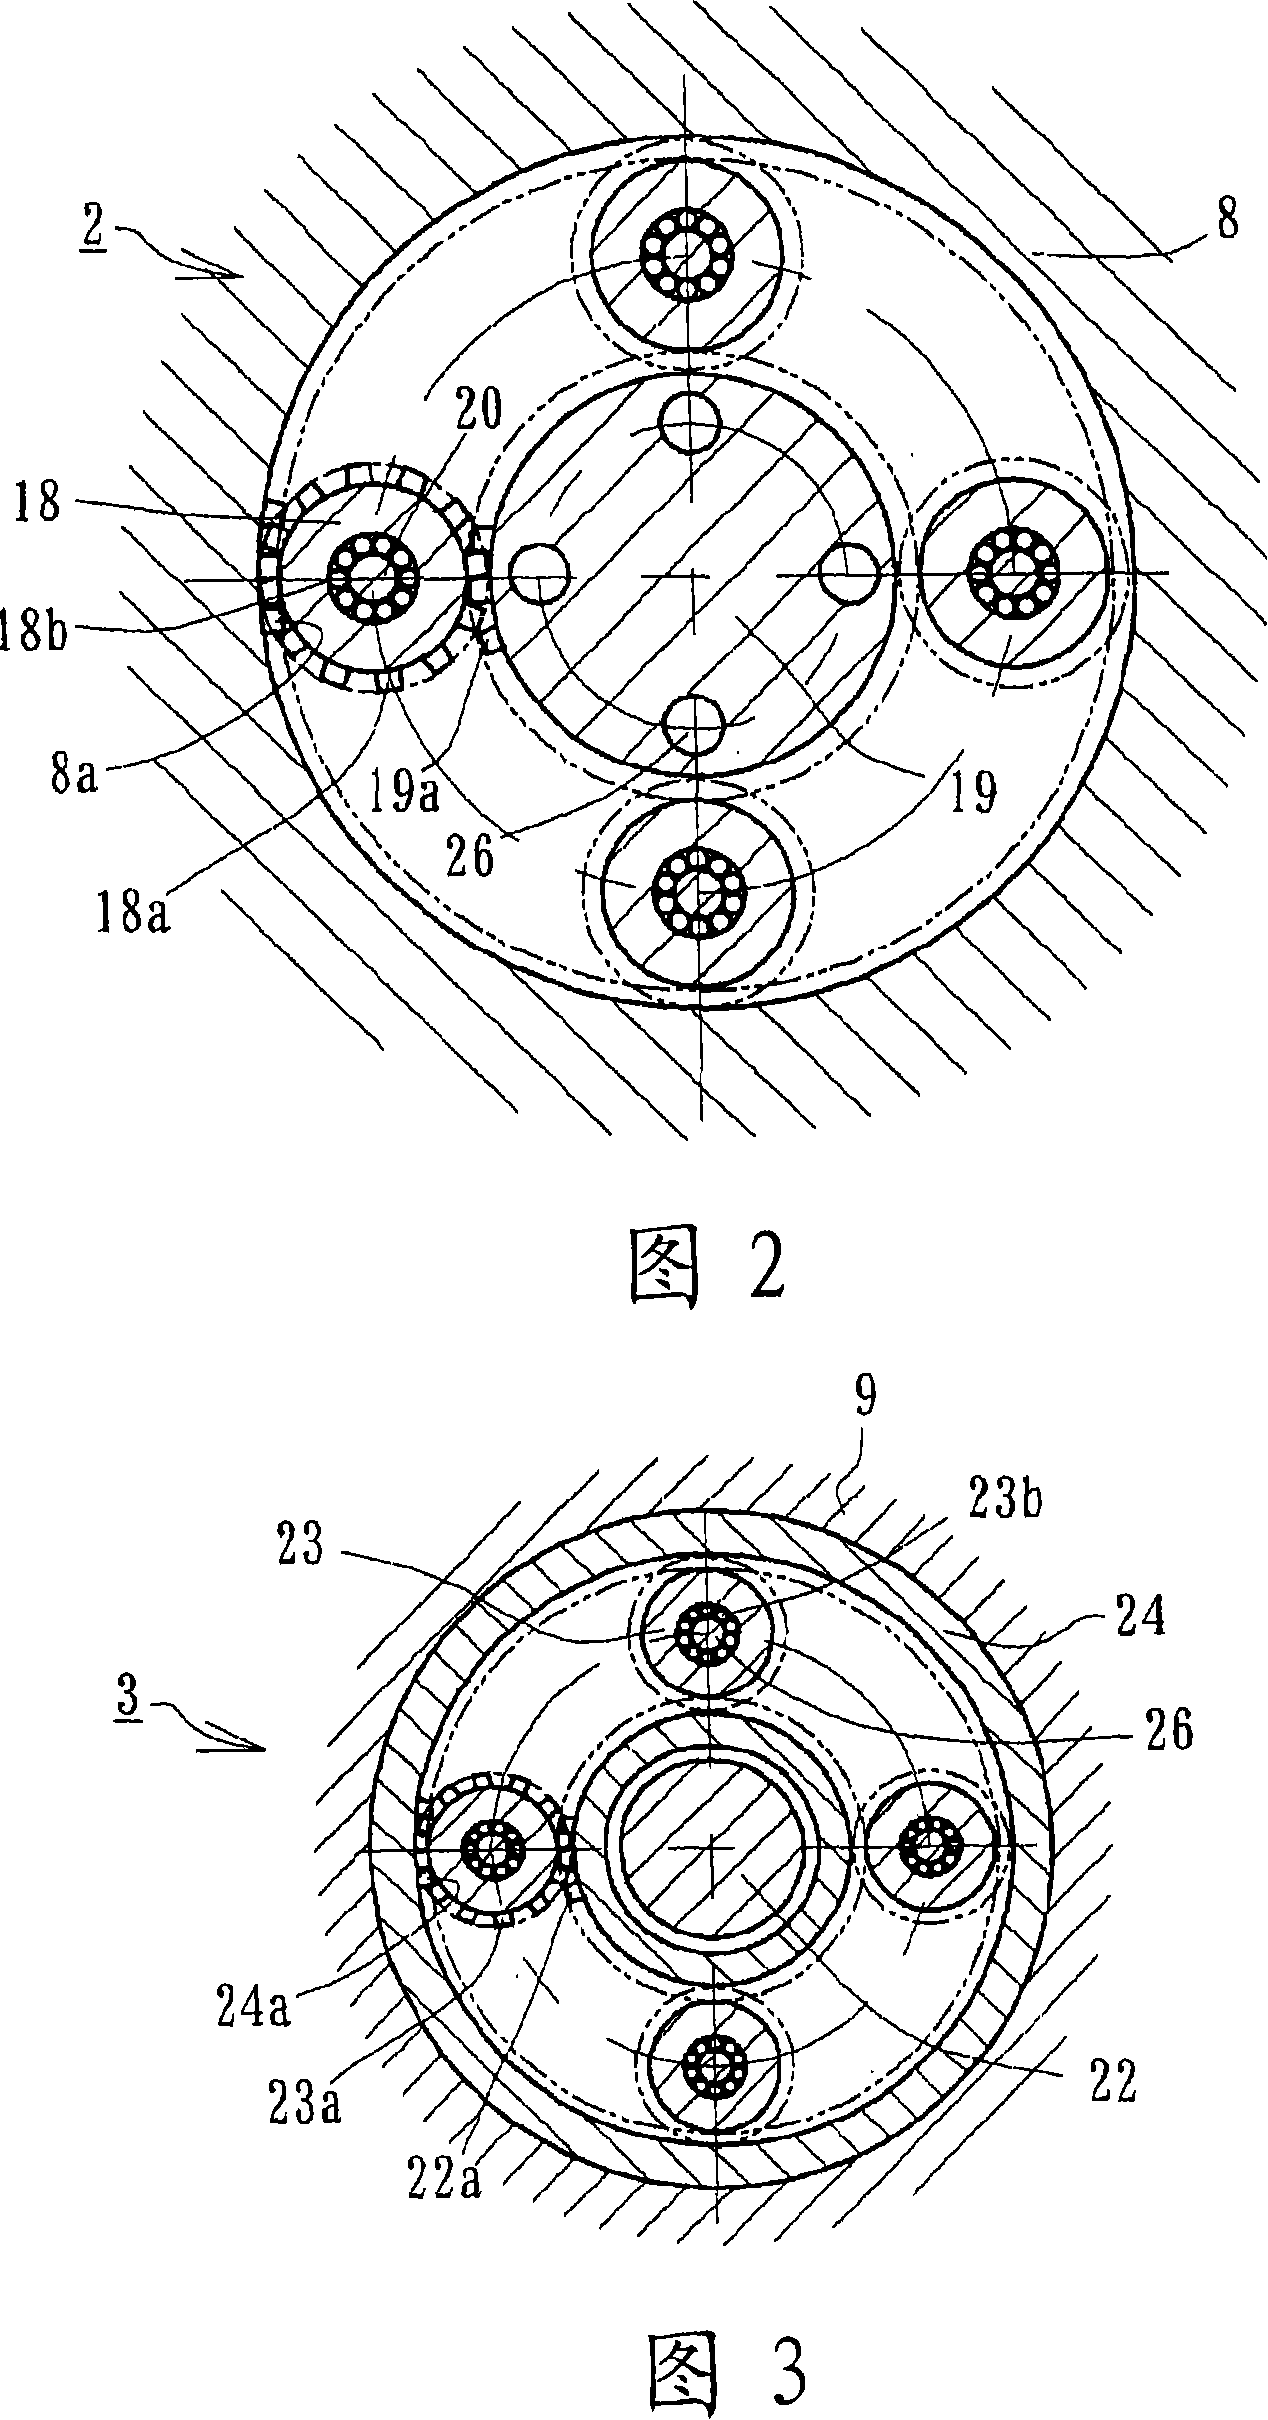 Motor-driven wheel driving apparatus